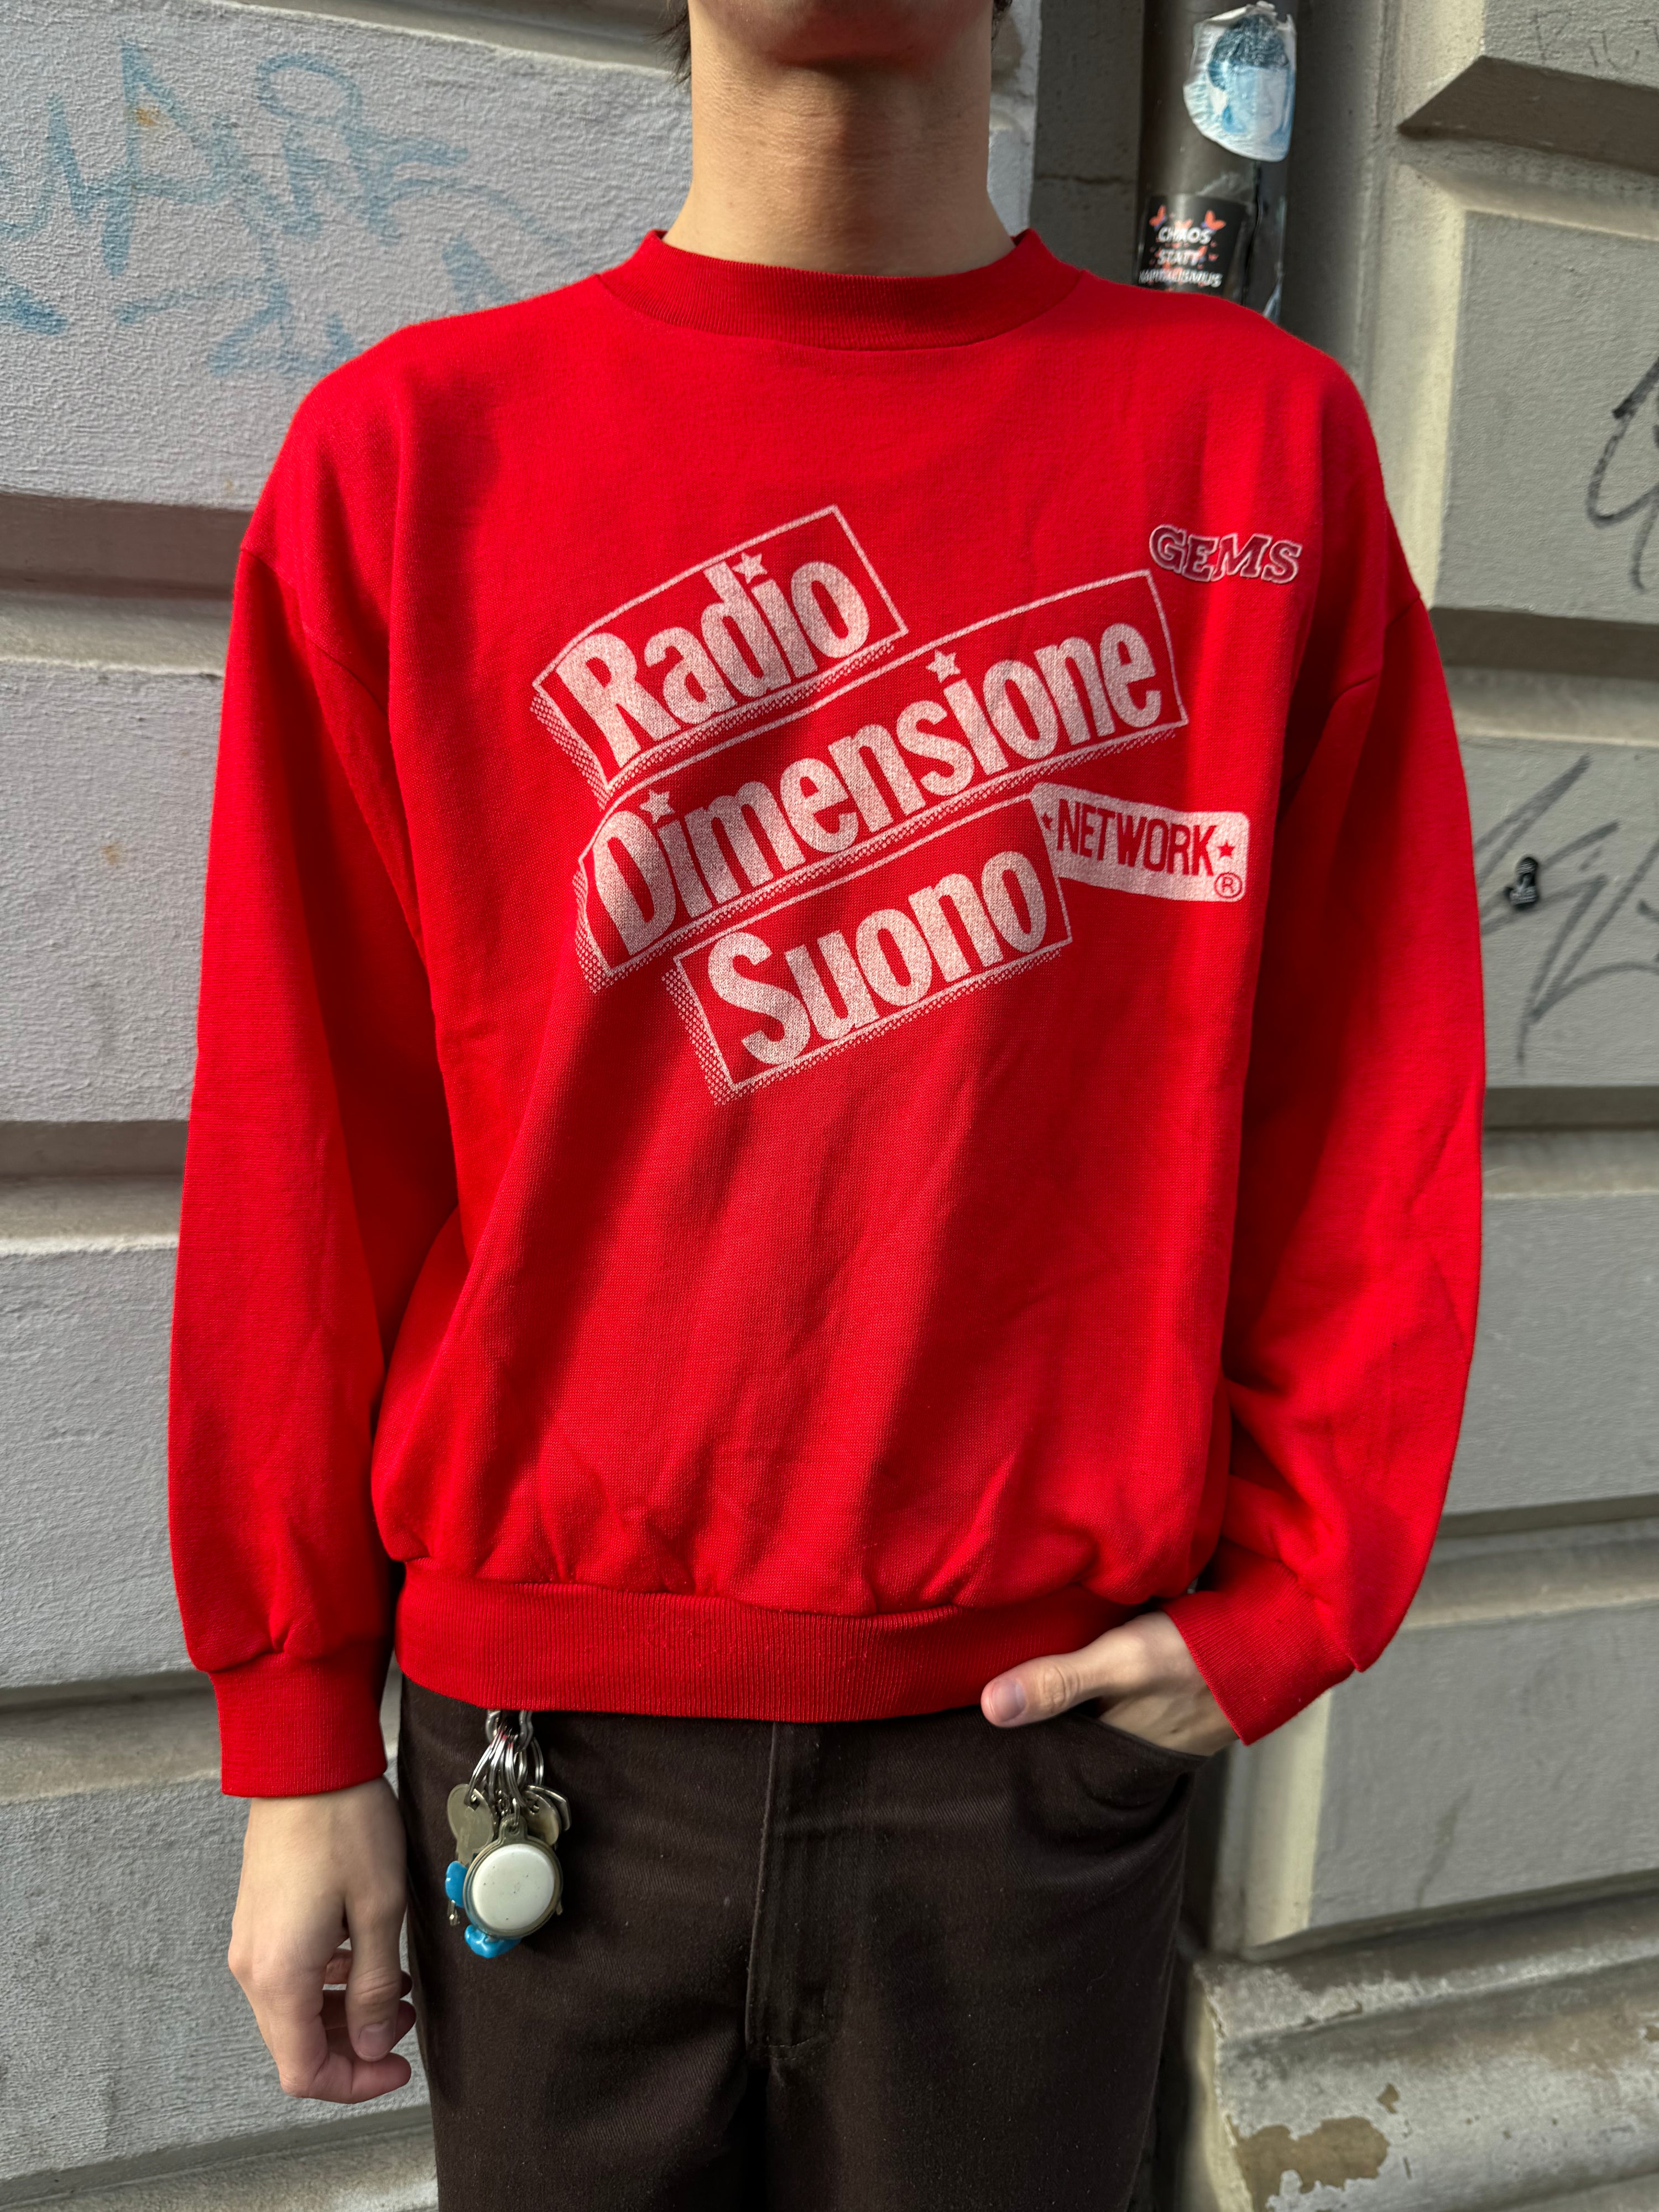 Vintage 90s Gems Radio Dimensione Suono Network Sweater (M)